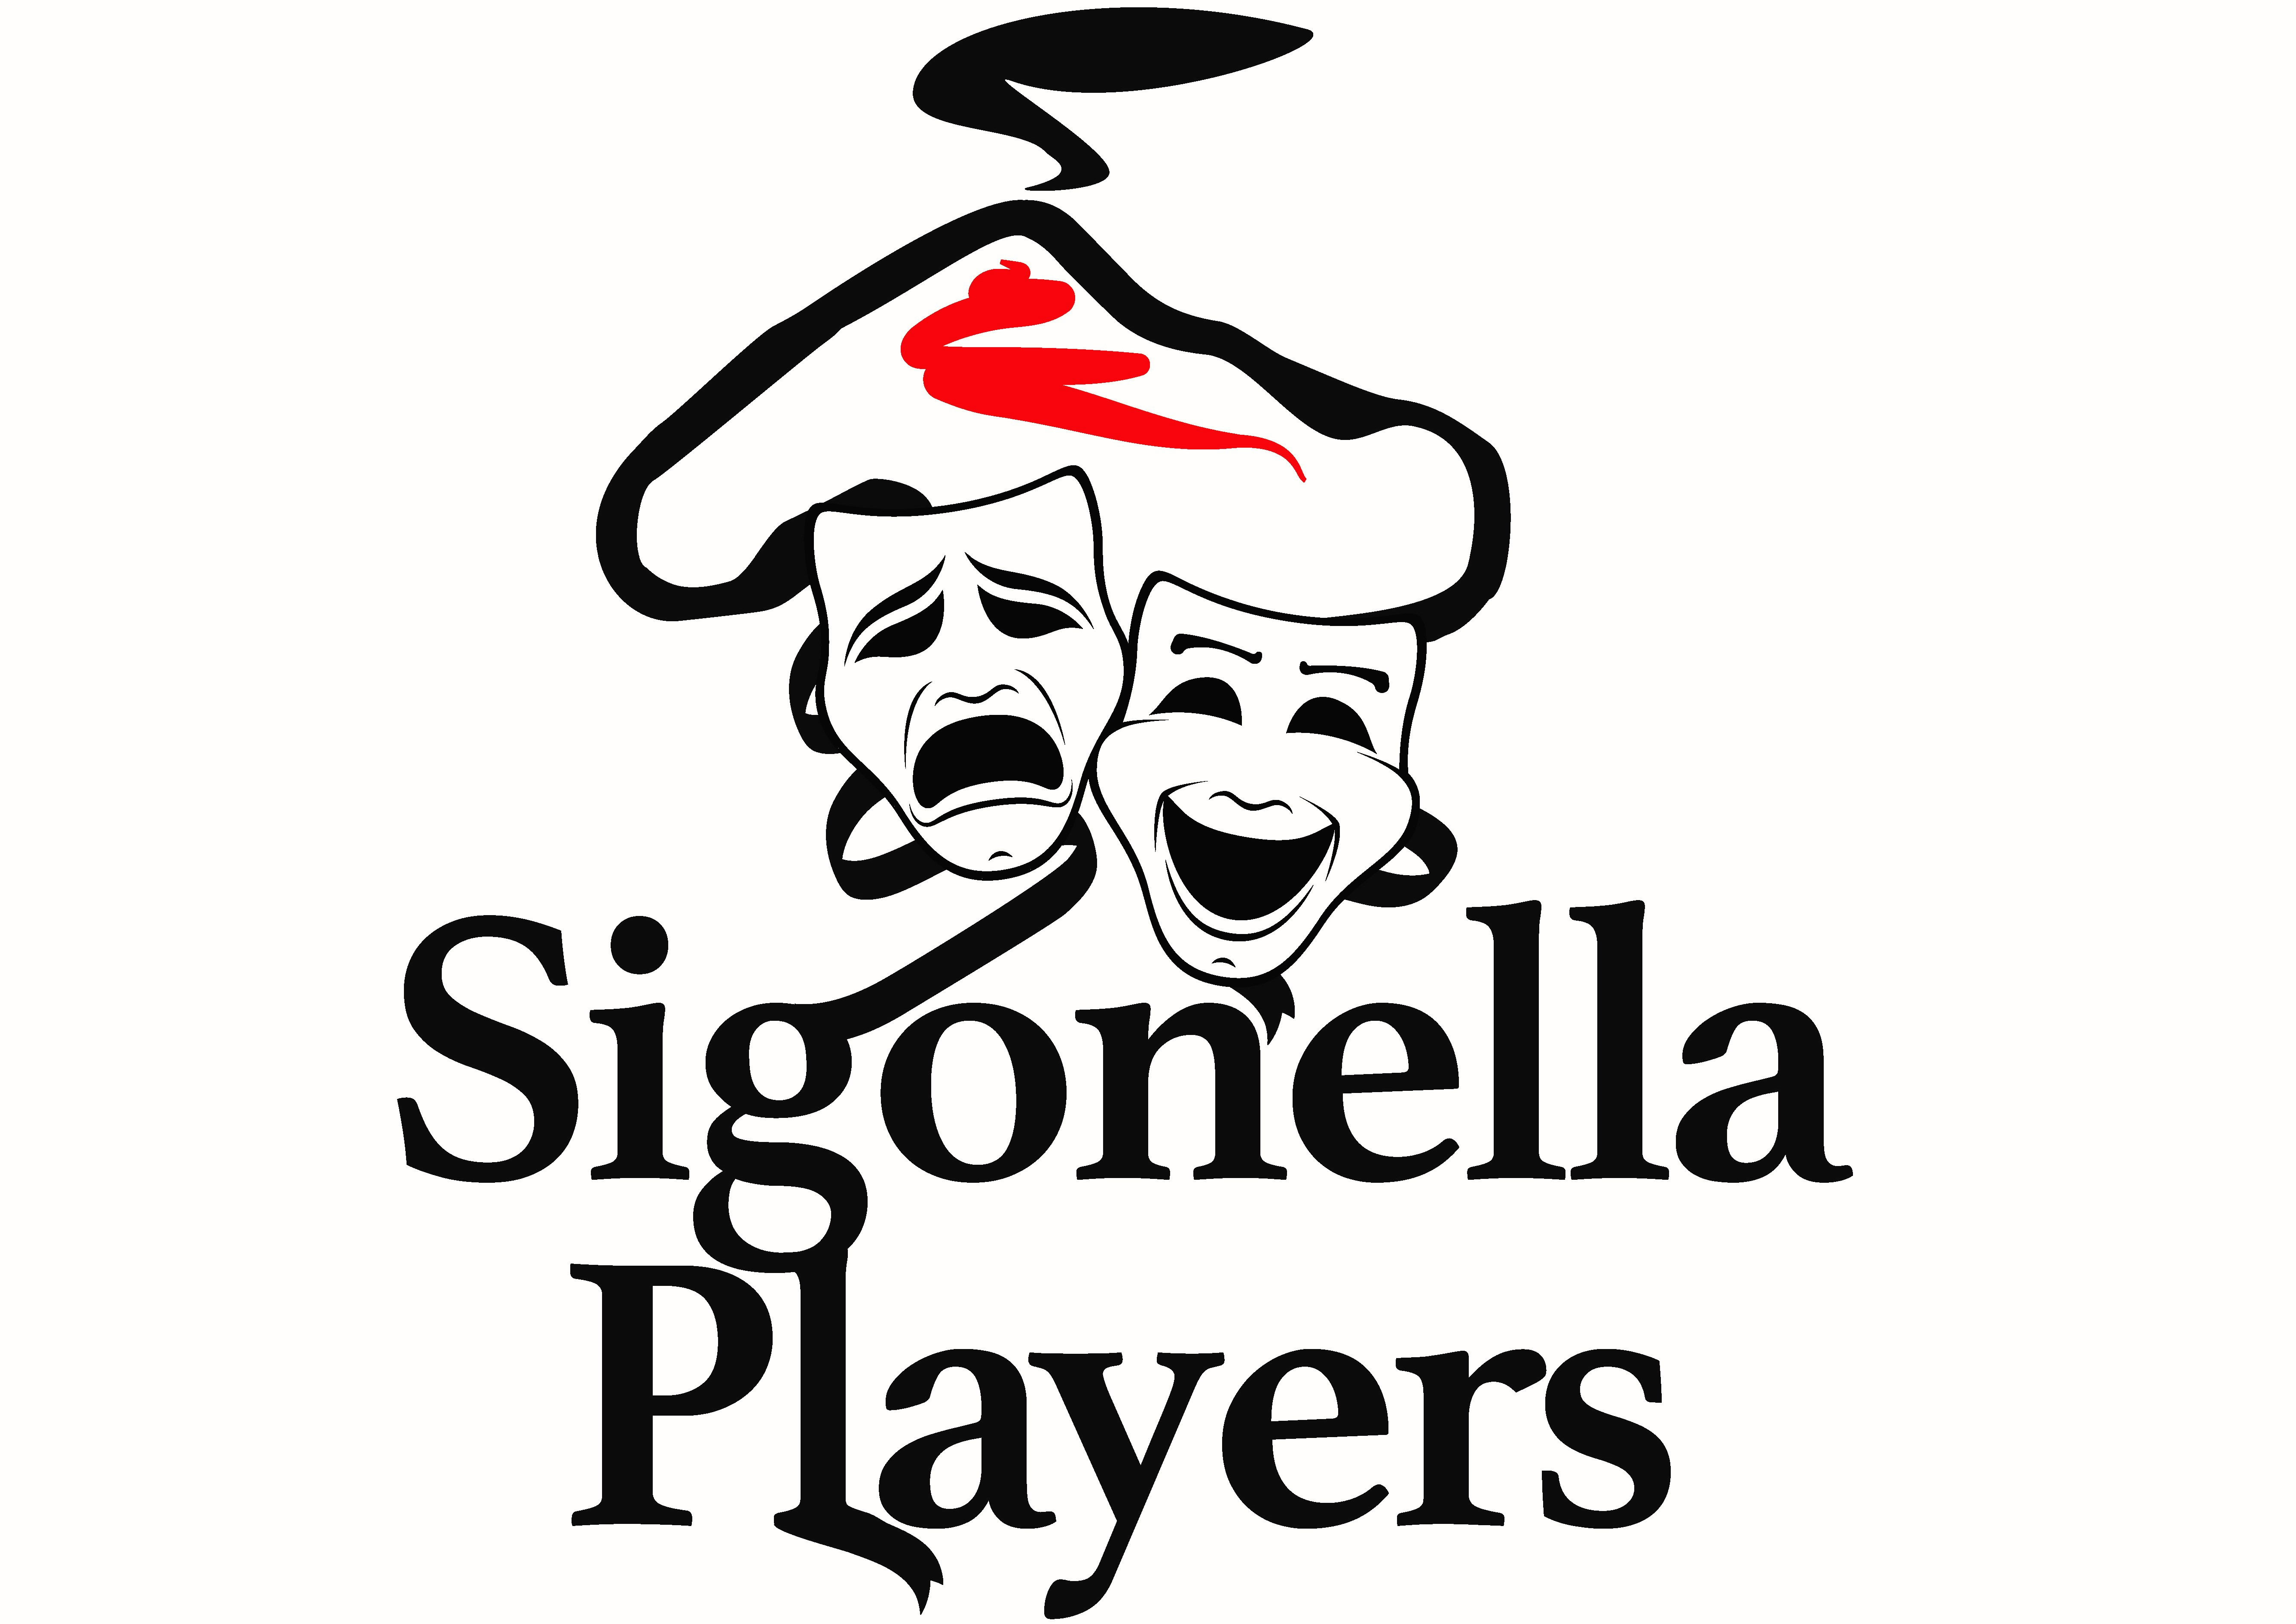 Sigonella Players logo cropped.jpg